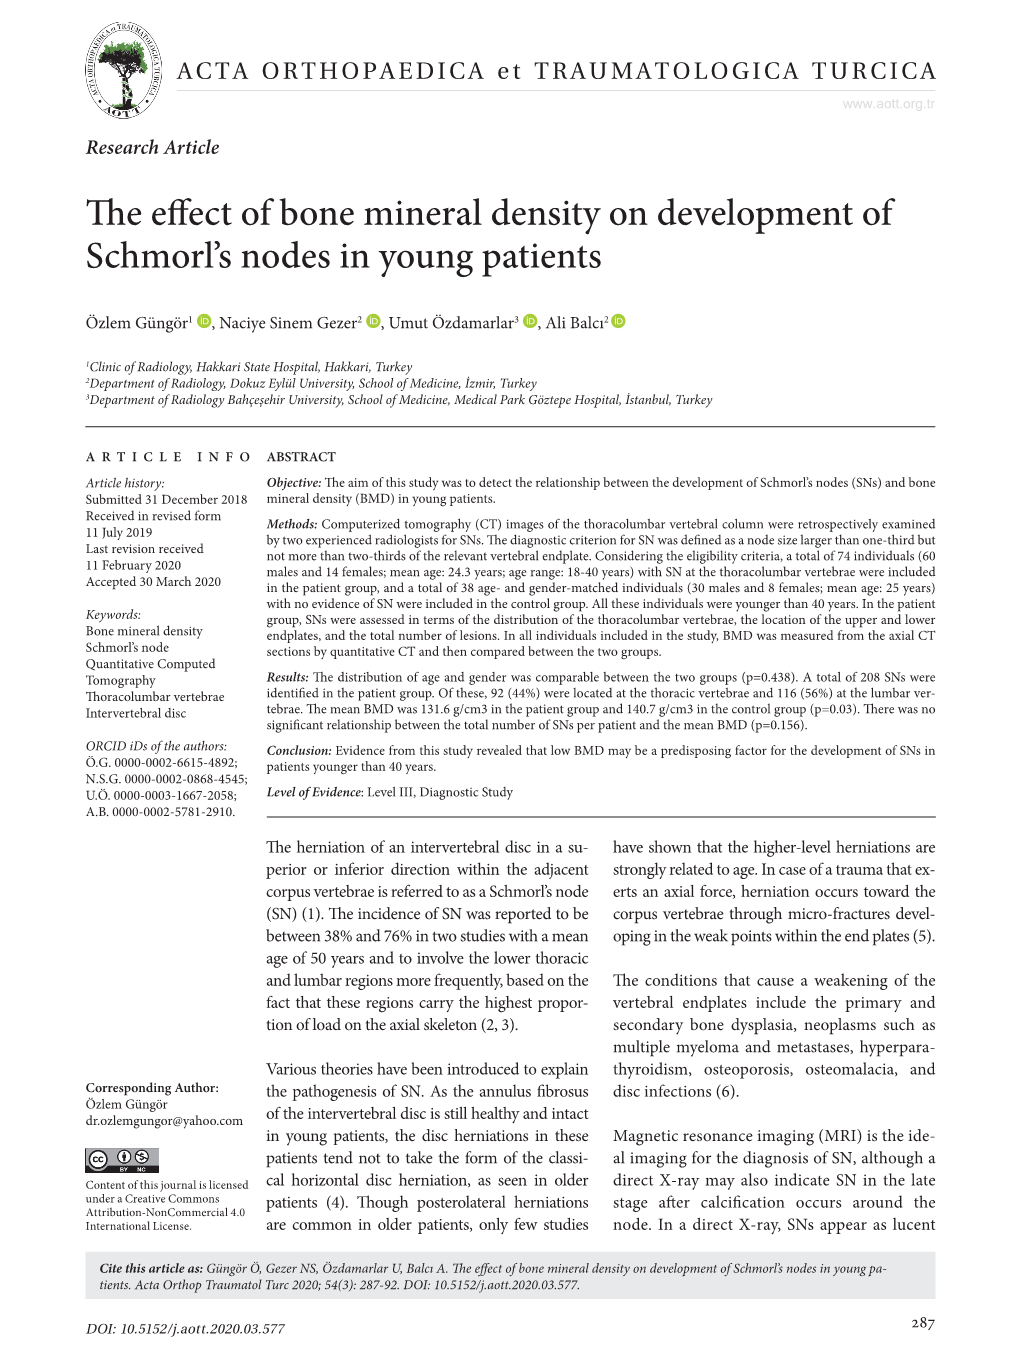 The Effect of Bone Mineral Density on Development of Schmorl's Nodes In